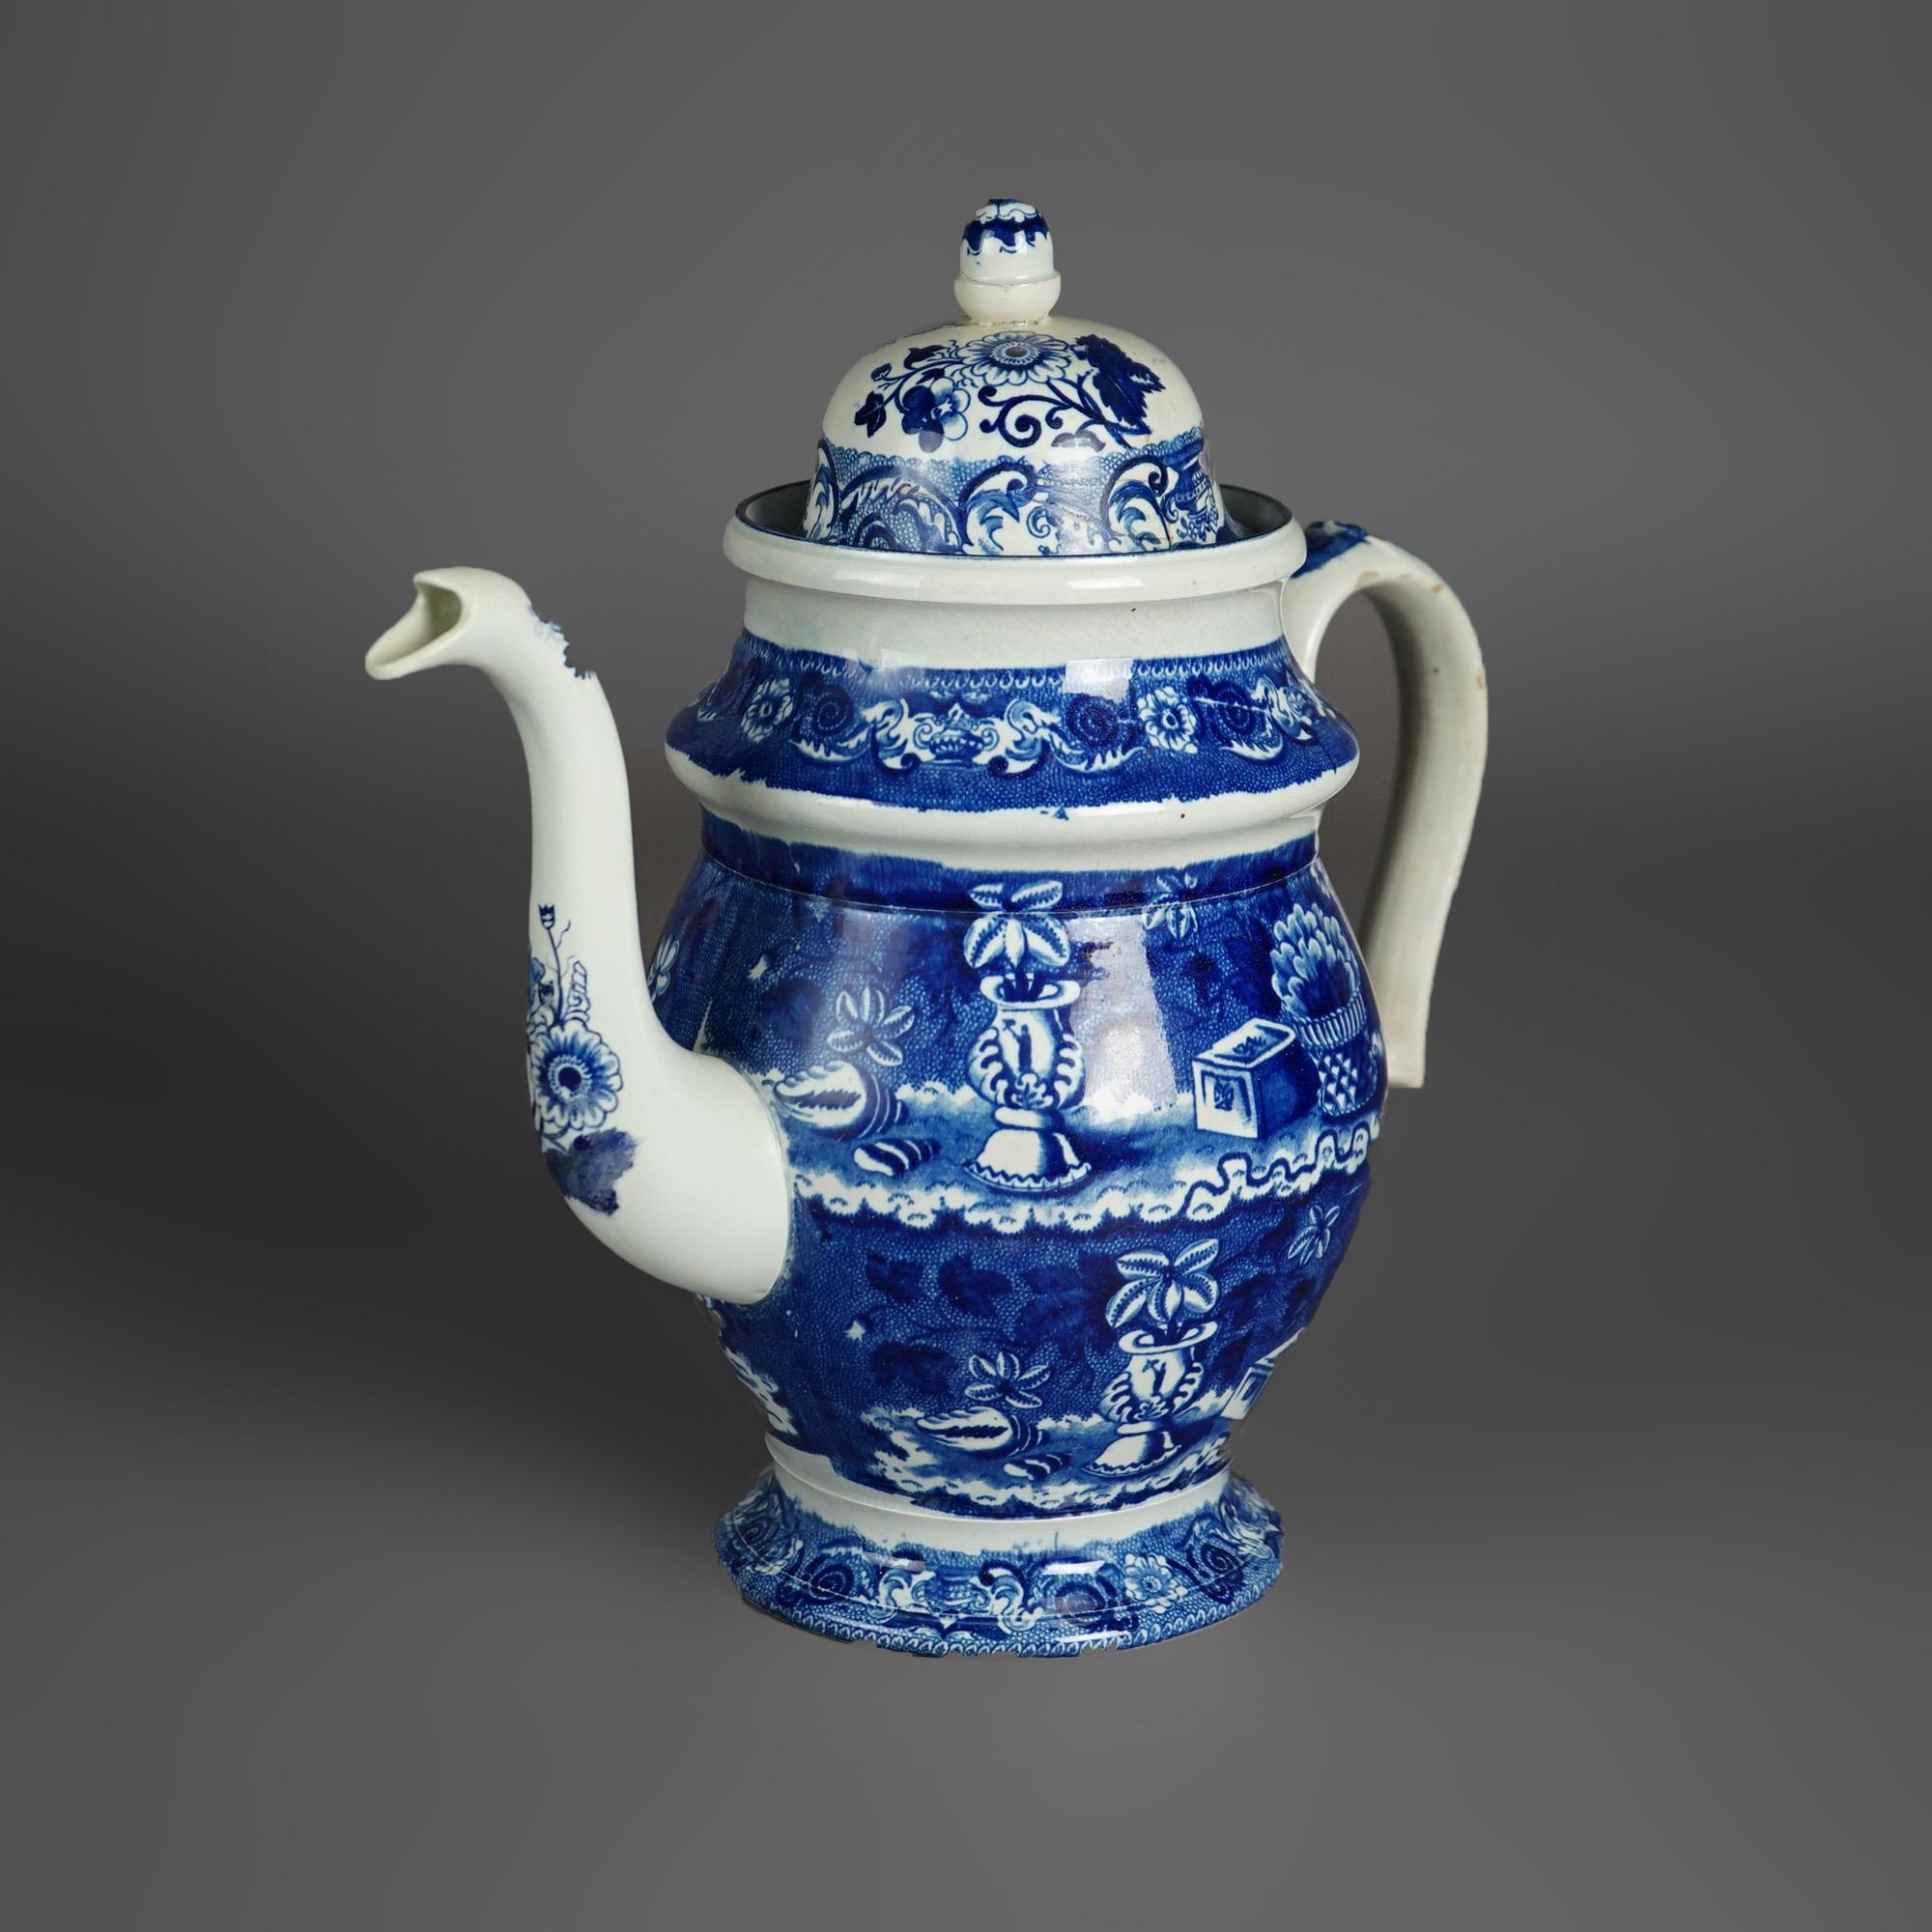 Antique Stevenson Staffordshire Pottery Flow Blue Lidded Coffee Pot 19thC

Measures - 11.75